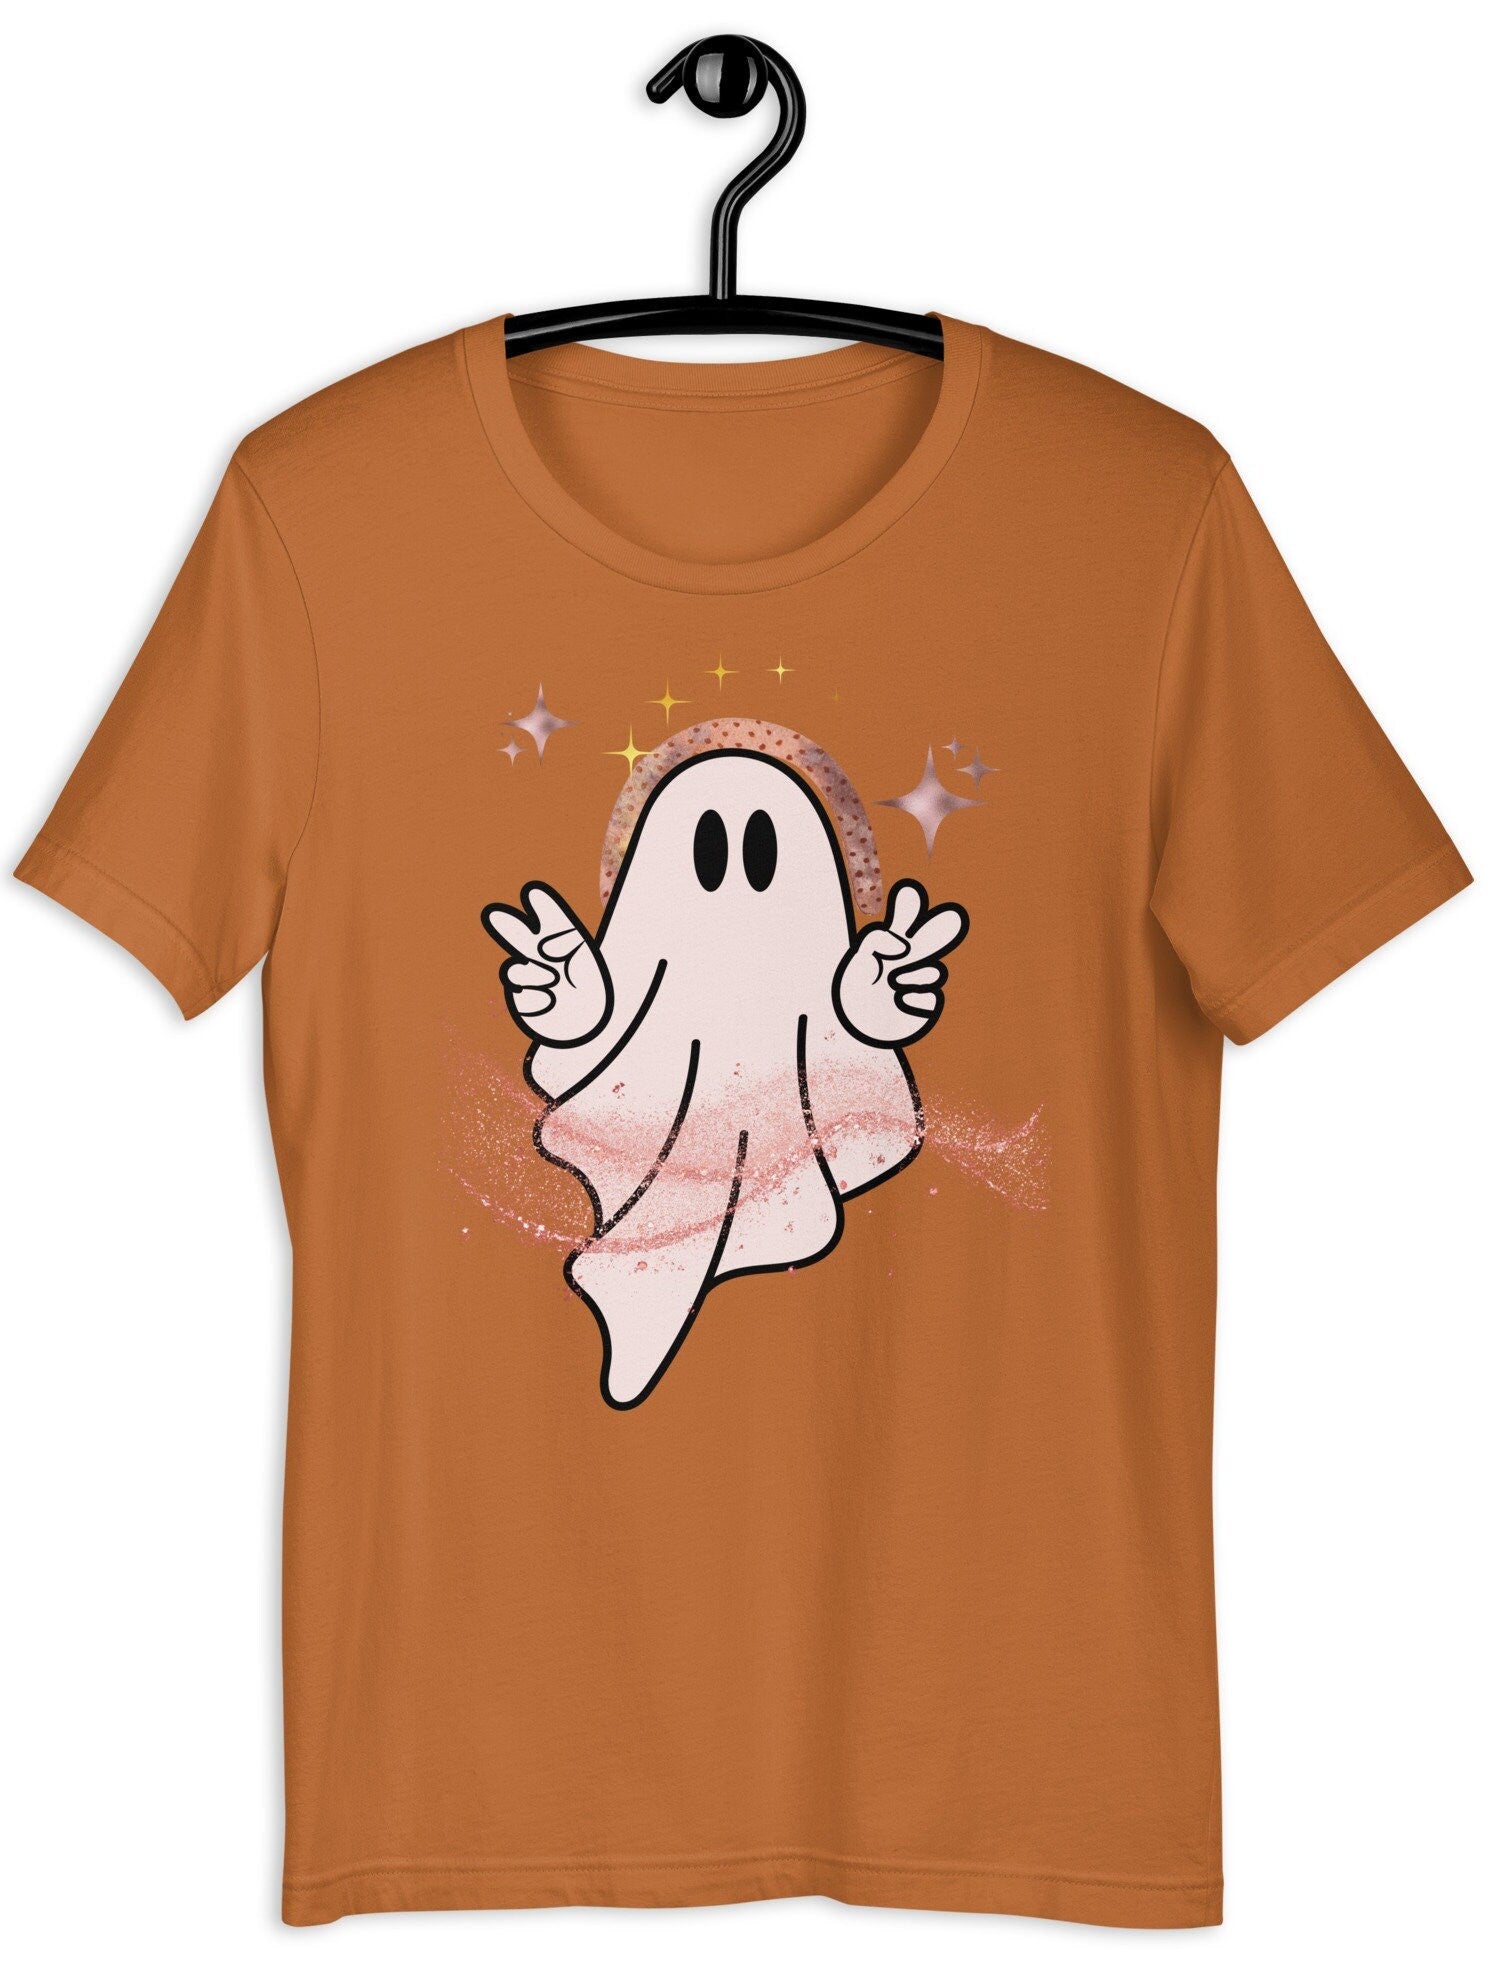 Cute Plus Size Ghost Shirt, Cute Halloween Shirt, Spooky Season Shirt, Plus Halloween Shirt, Oversized Ghost tee t-shirt